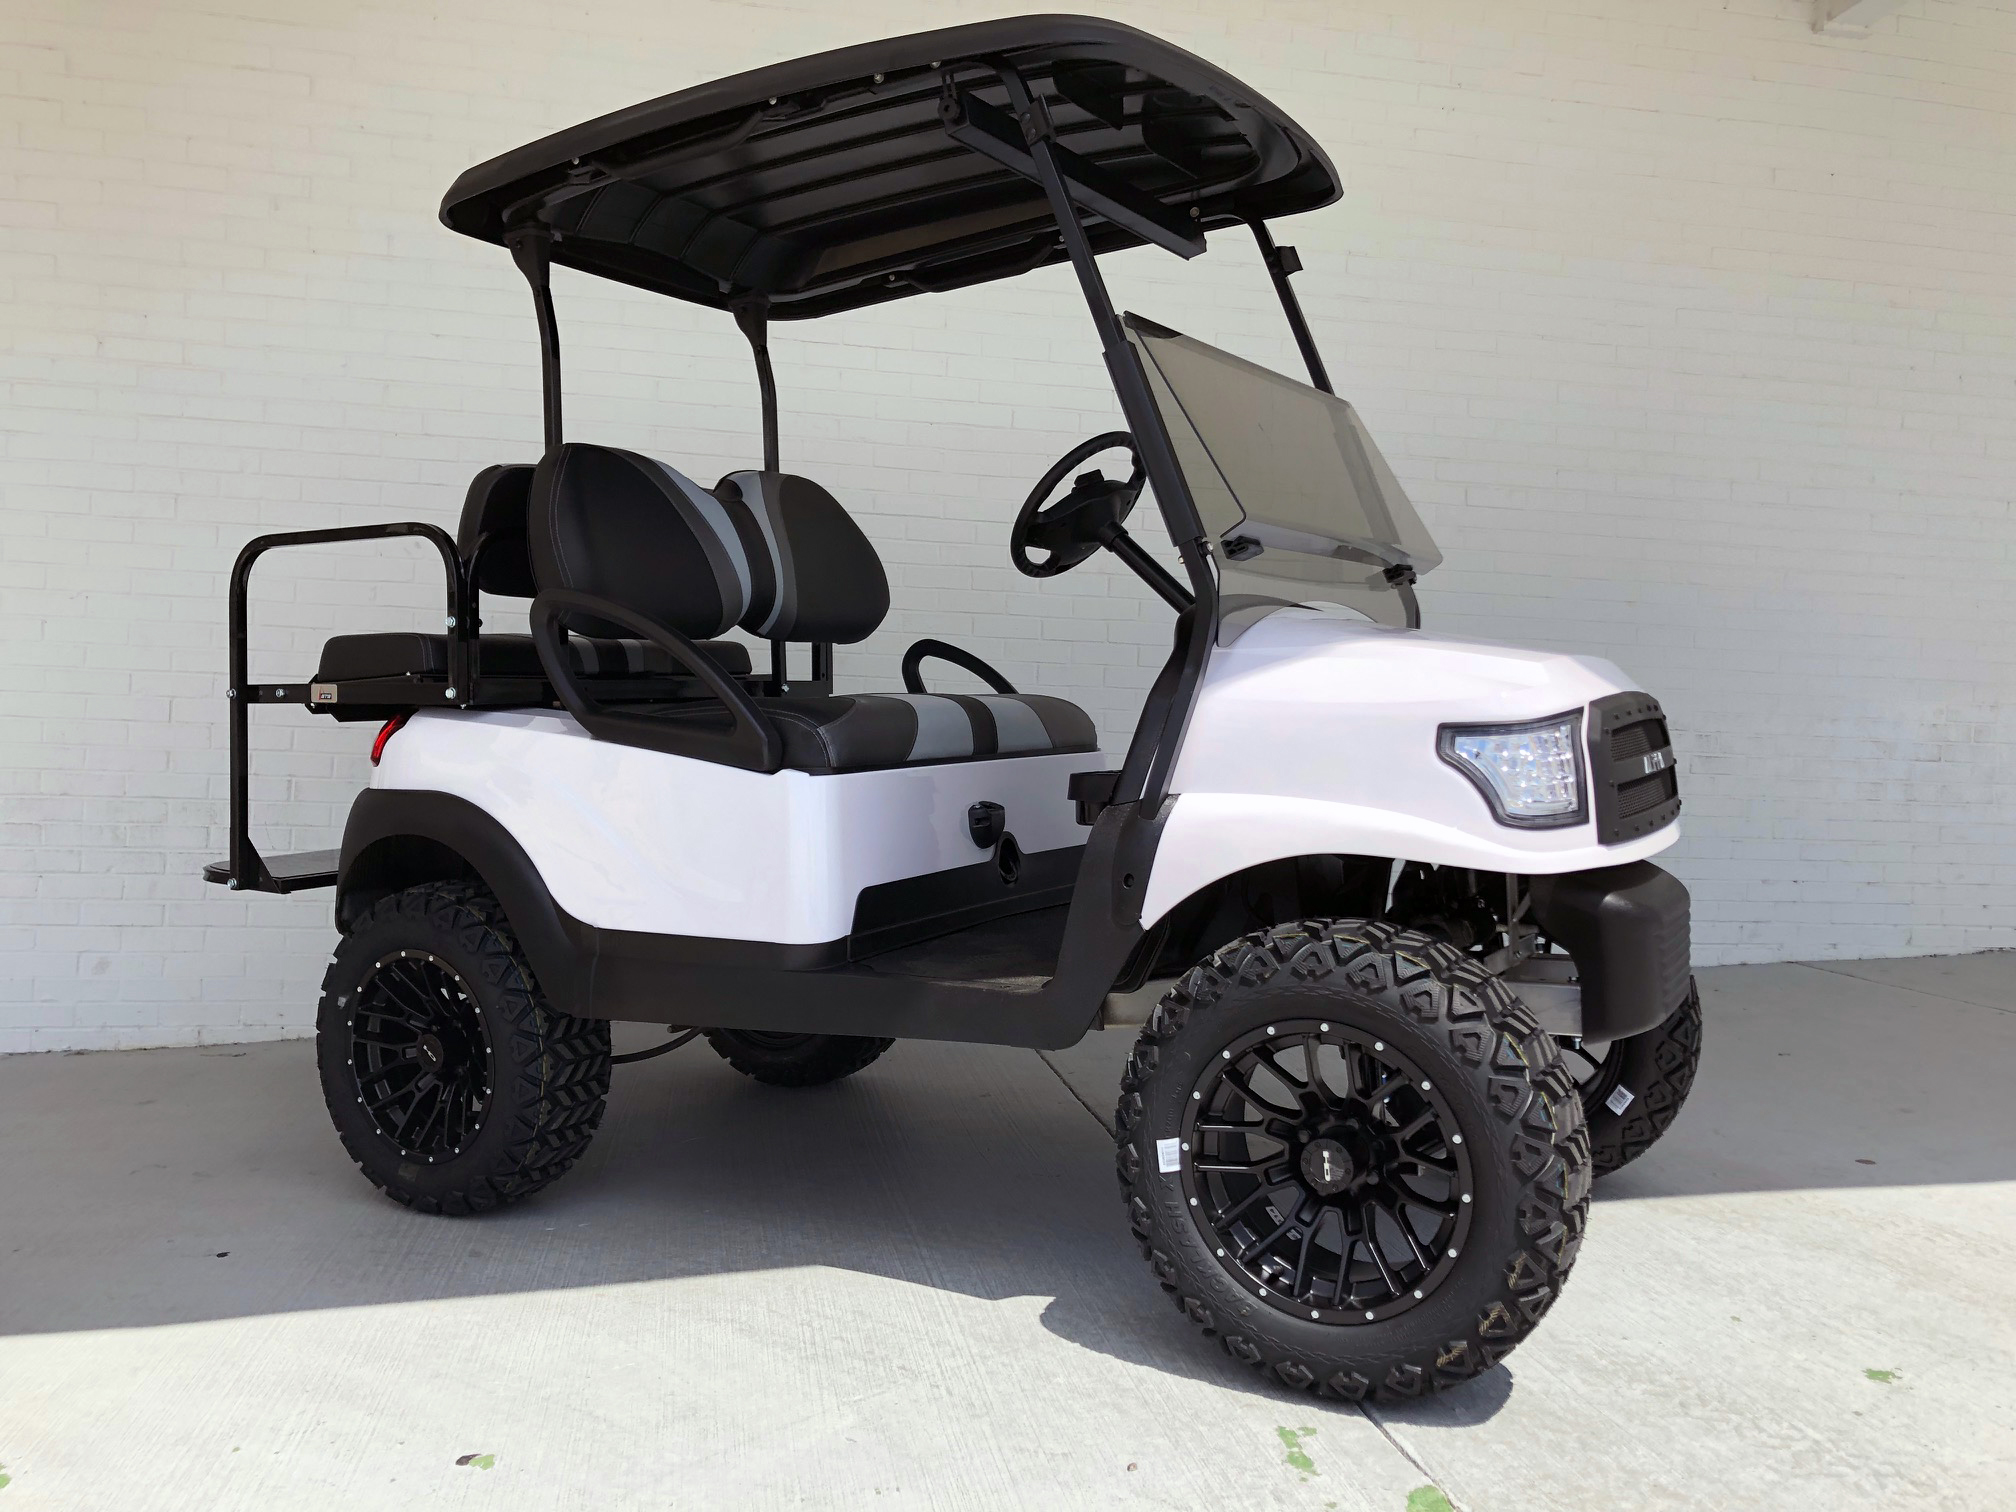 Alpha White Lifted Club Car Precedent Golf Cart | Golf Carts - Lifted